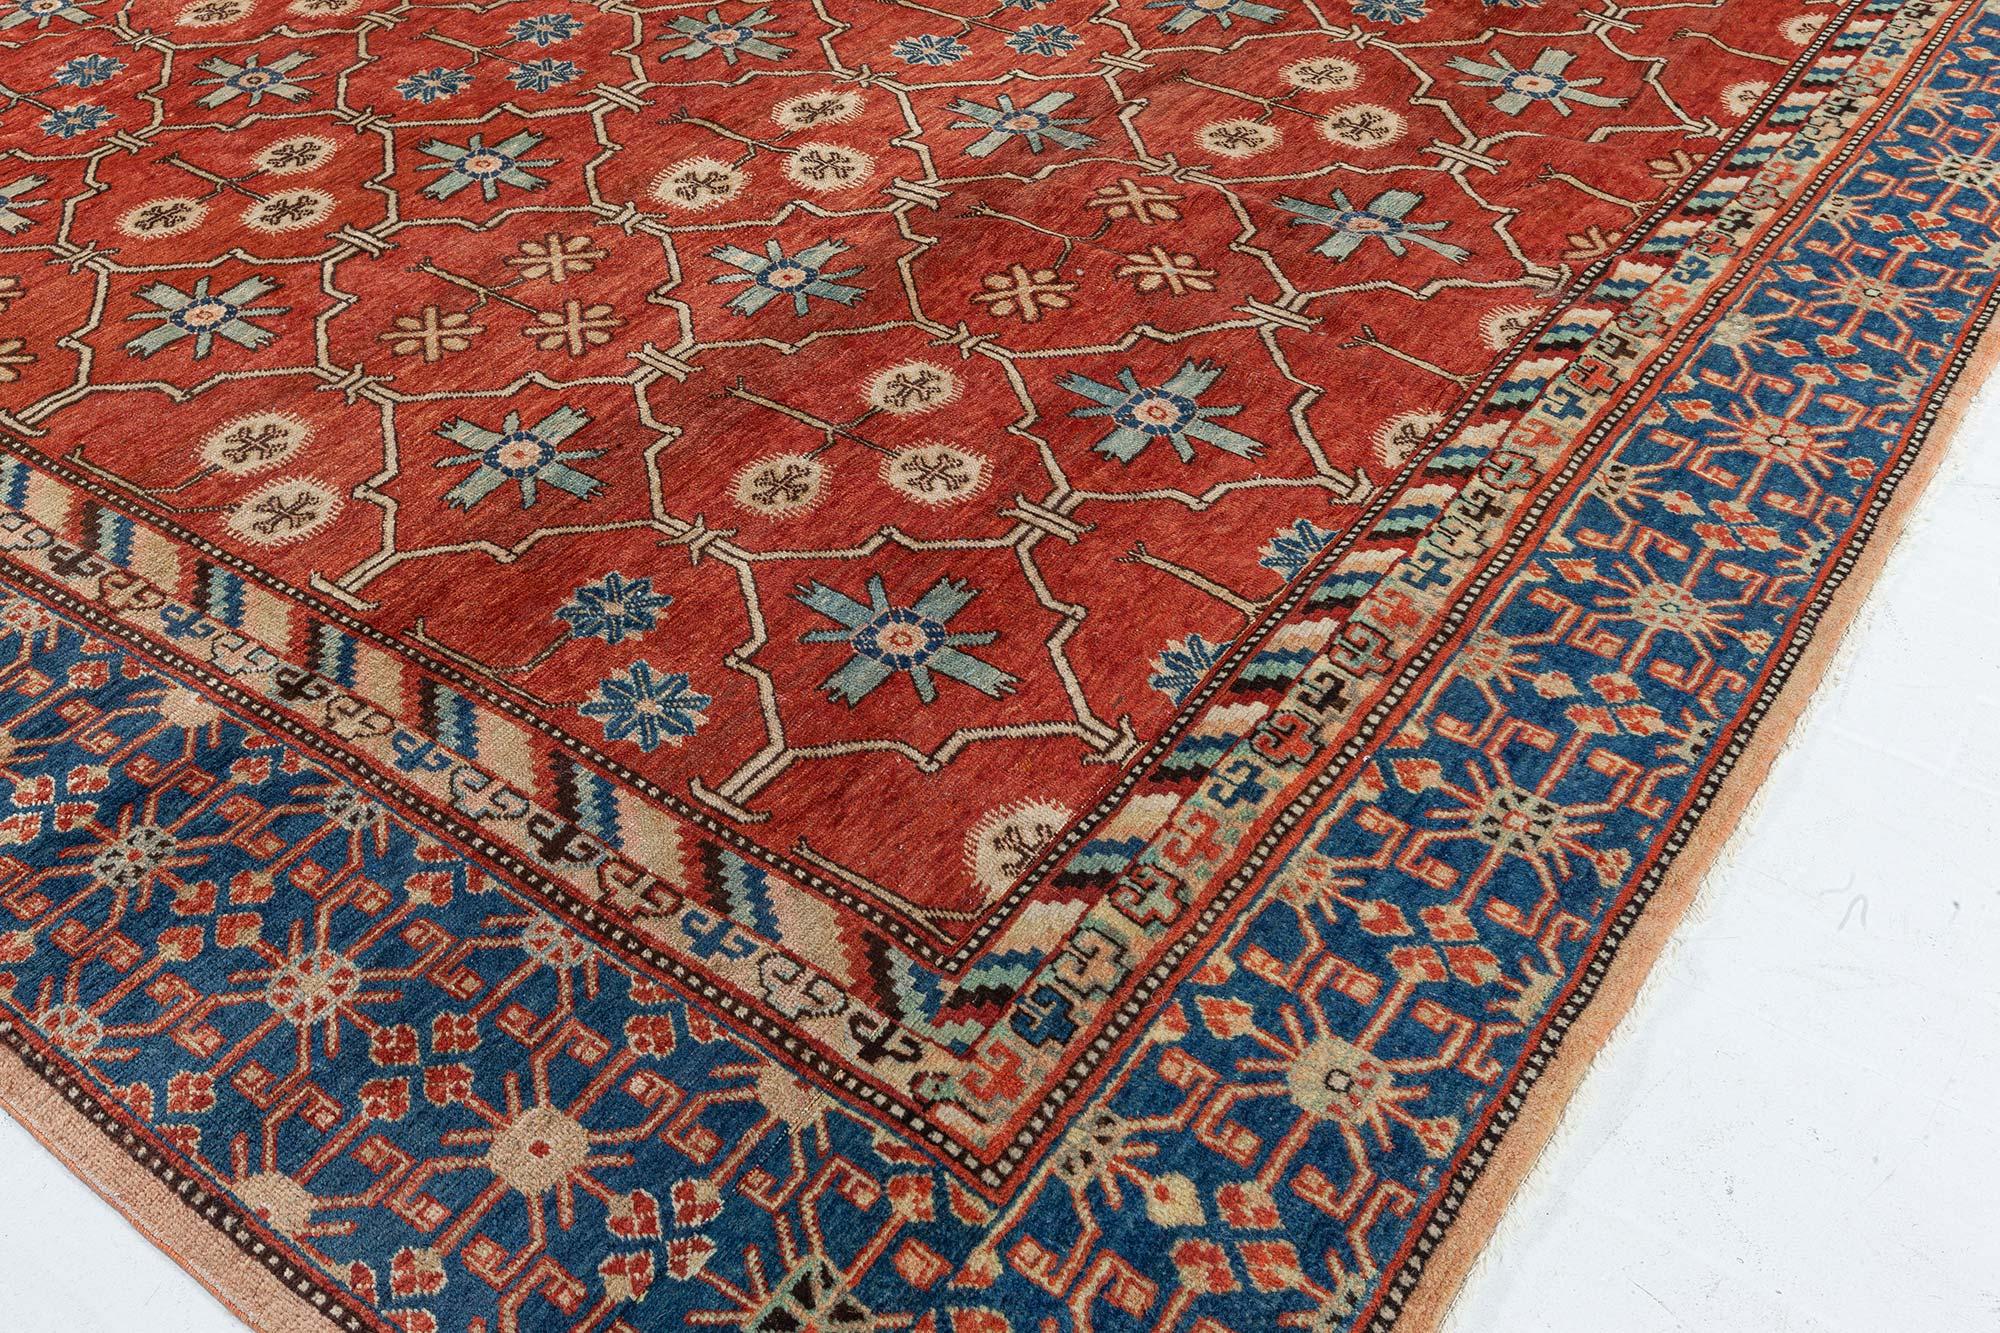 Vintage Samarkand (Khotan) Rug
Size: 8'9